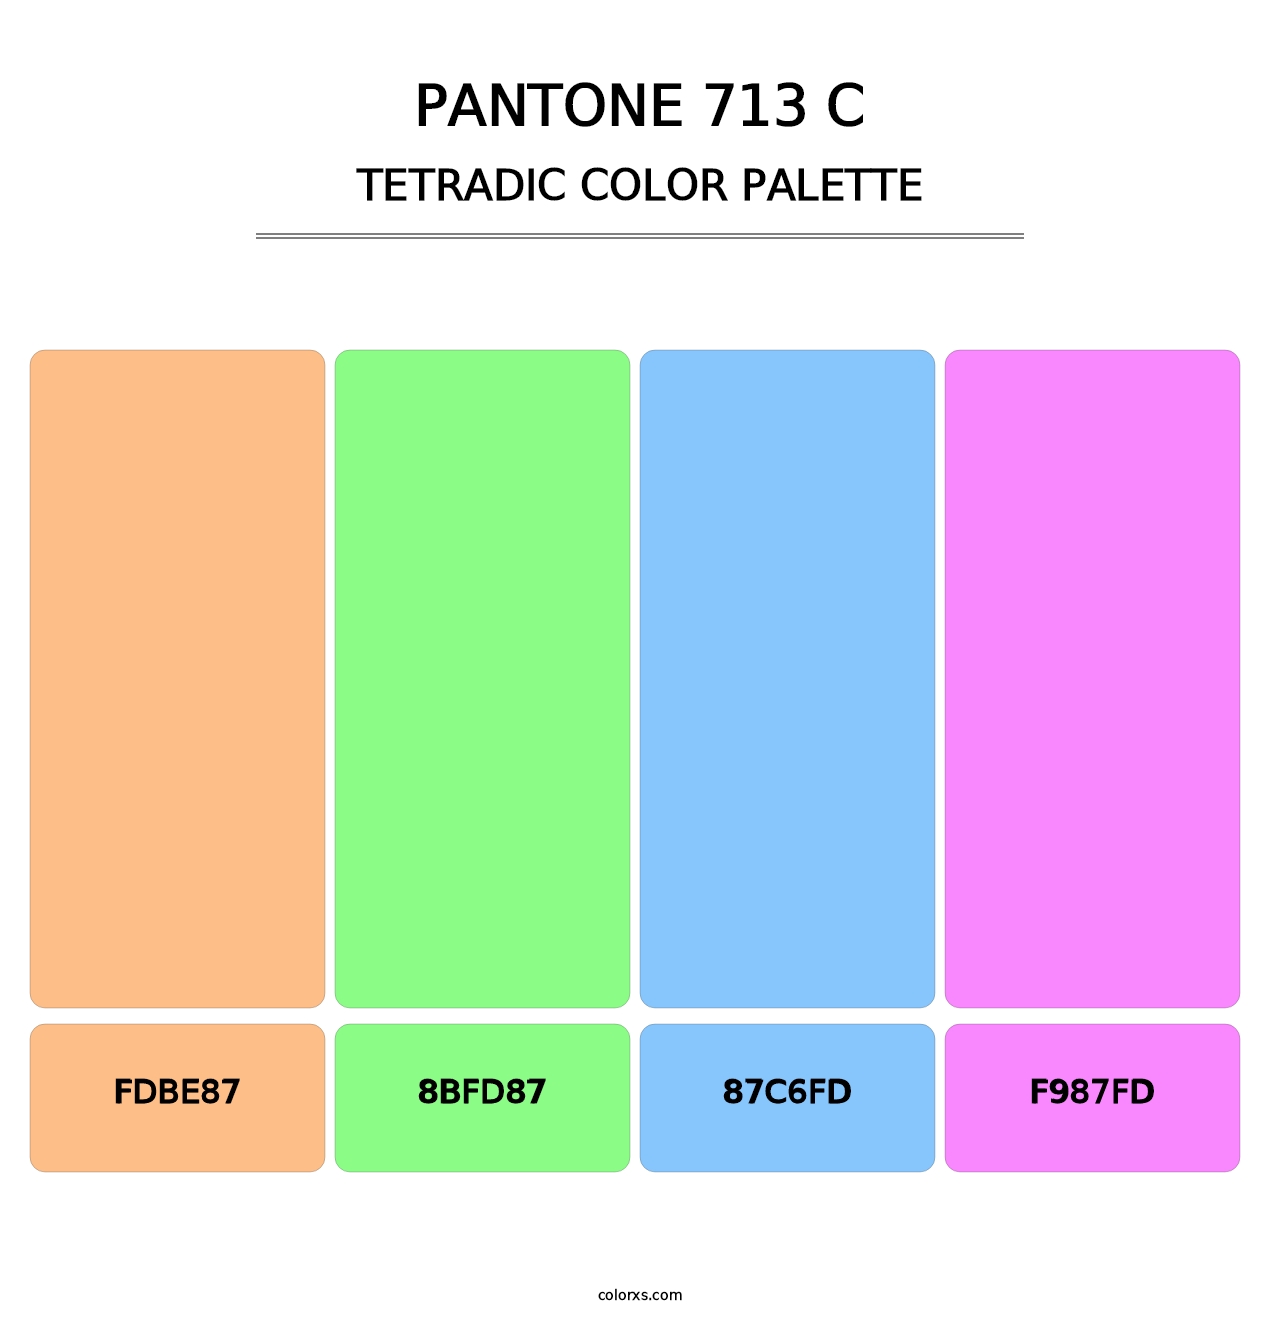 PANTONE 713 C - Tetradic Color Palette